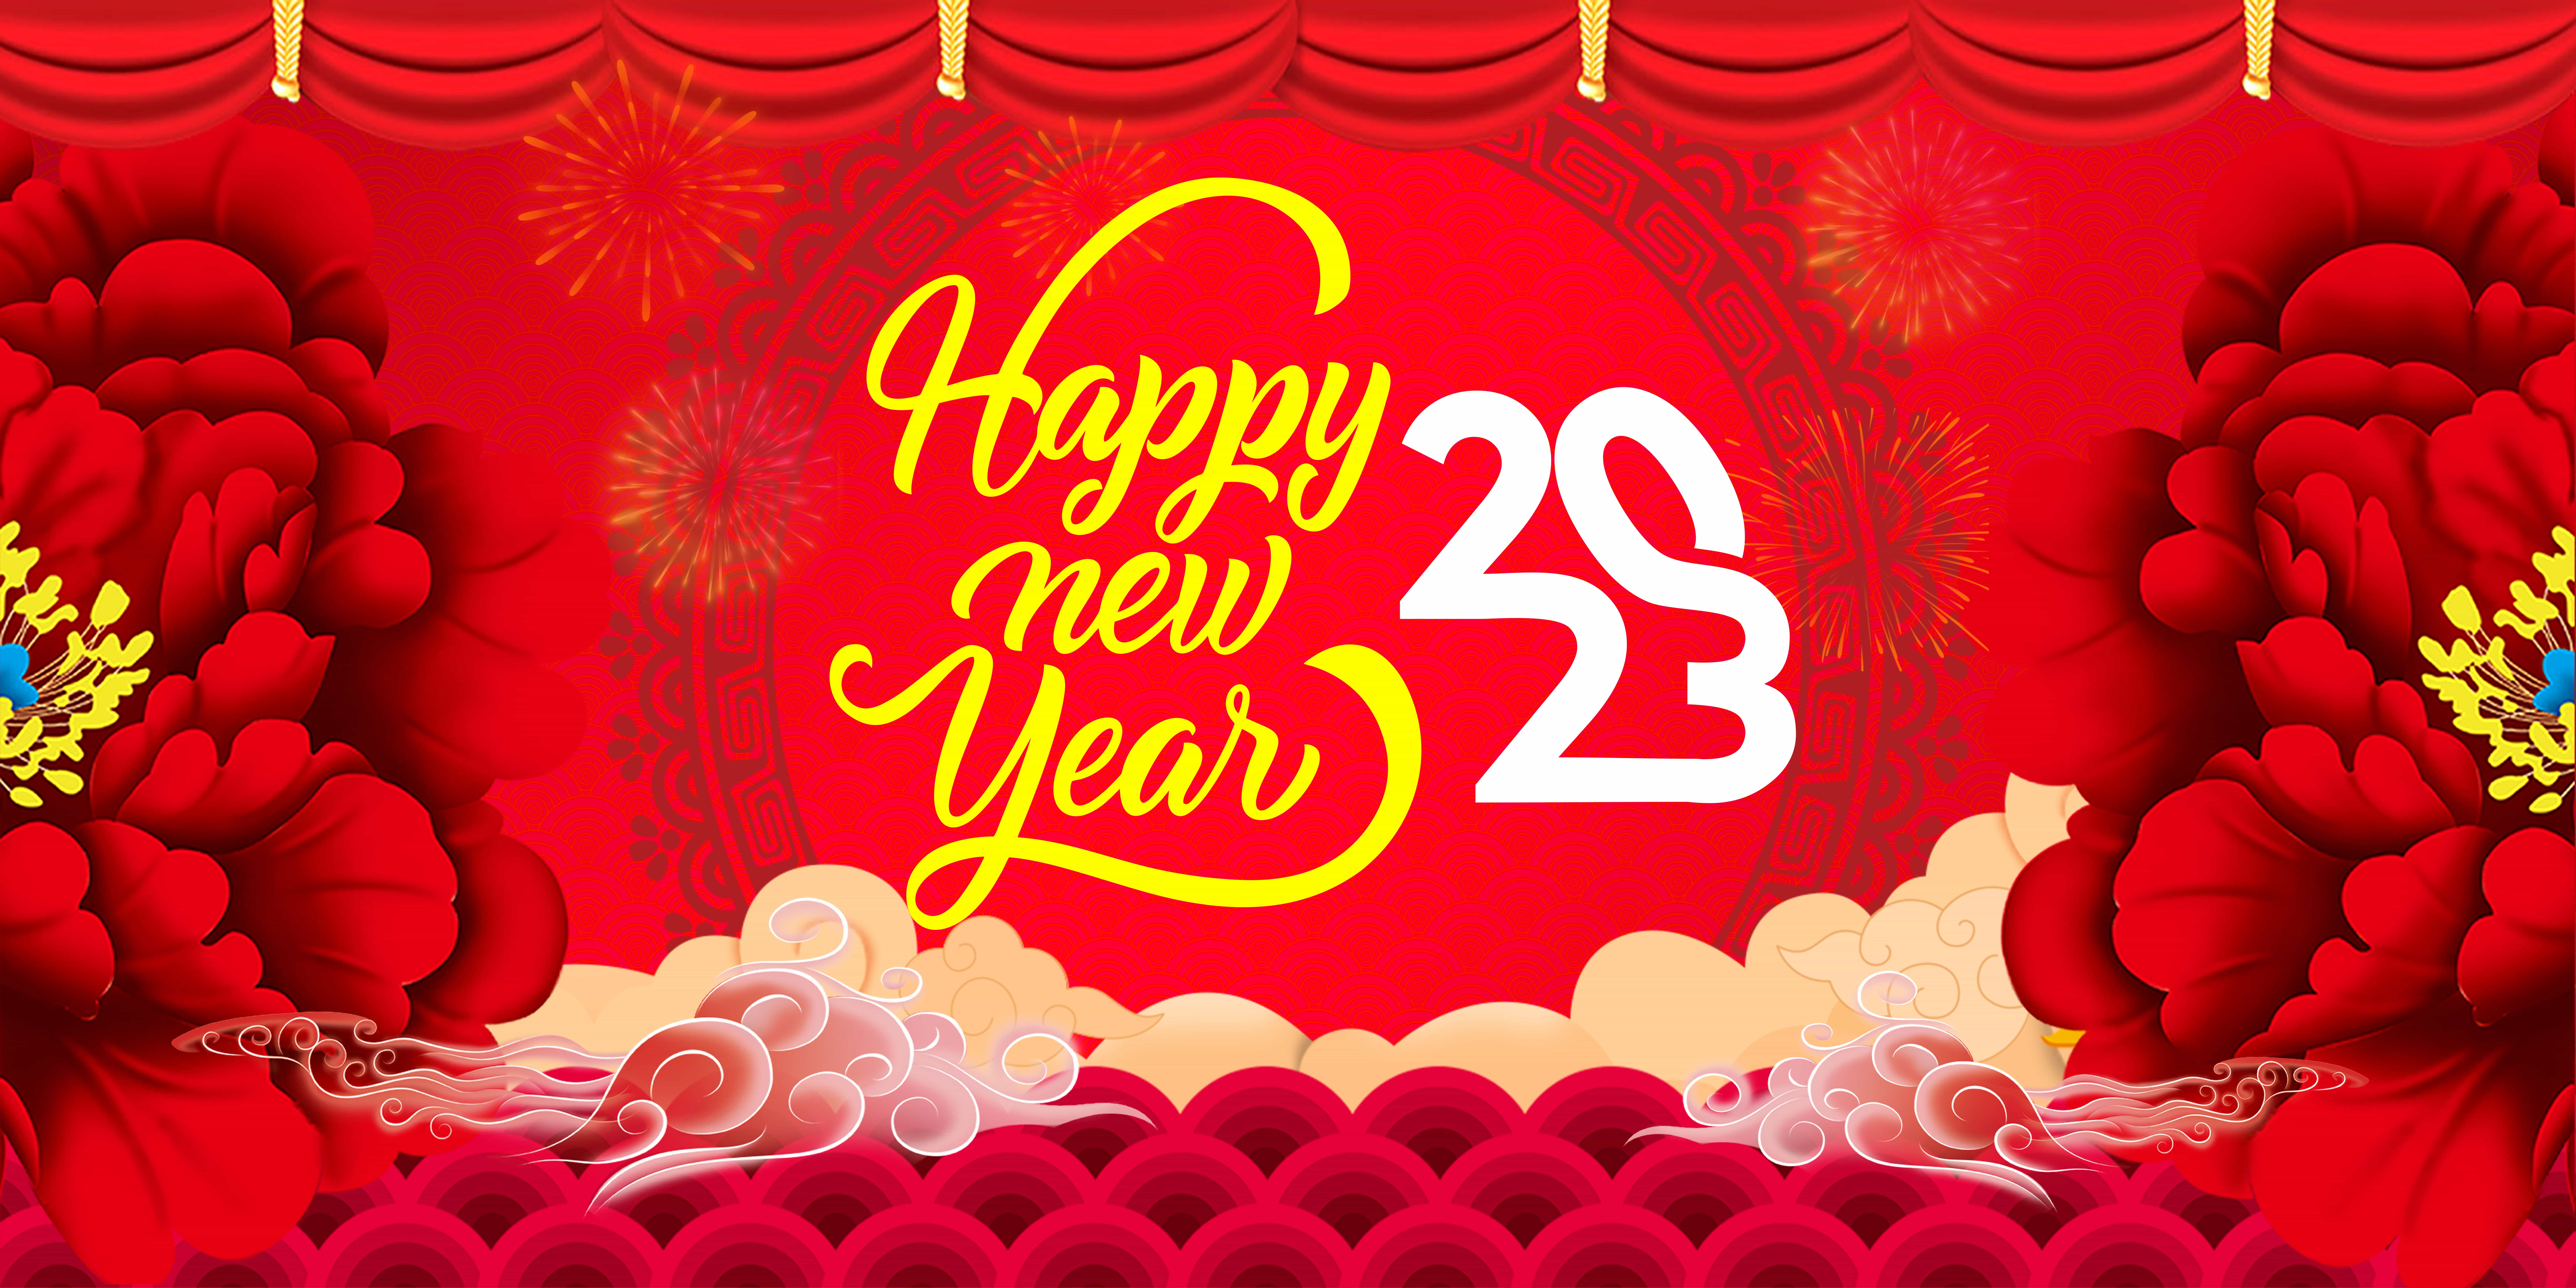 Mẫu backdrop happy new year 2023 - Vector tết 2023 | vector tiệc tất niên #18